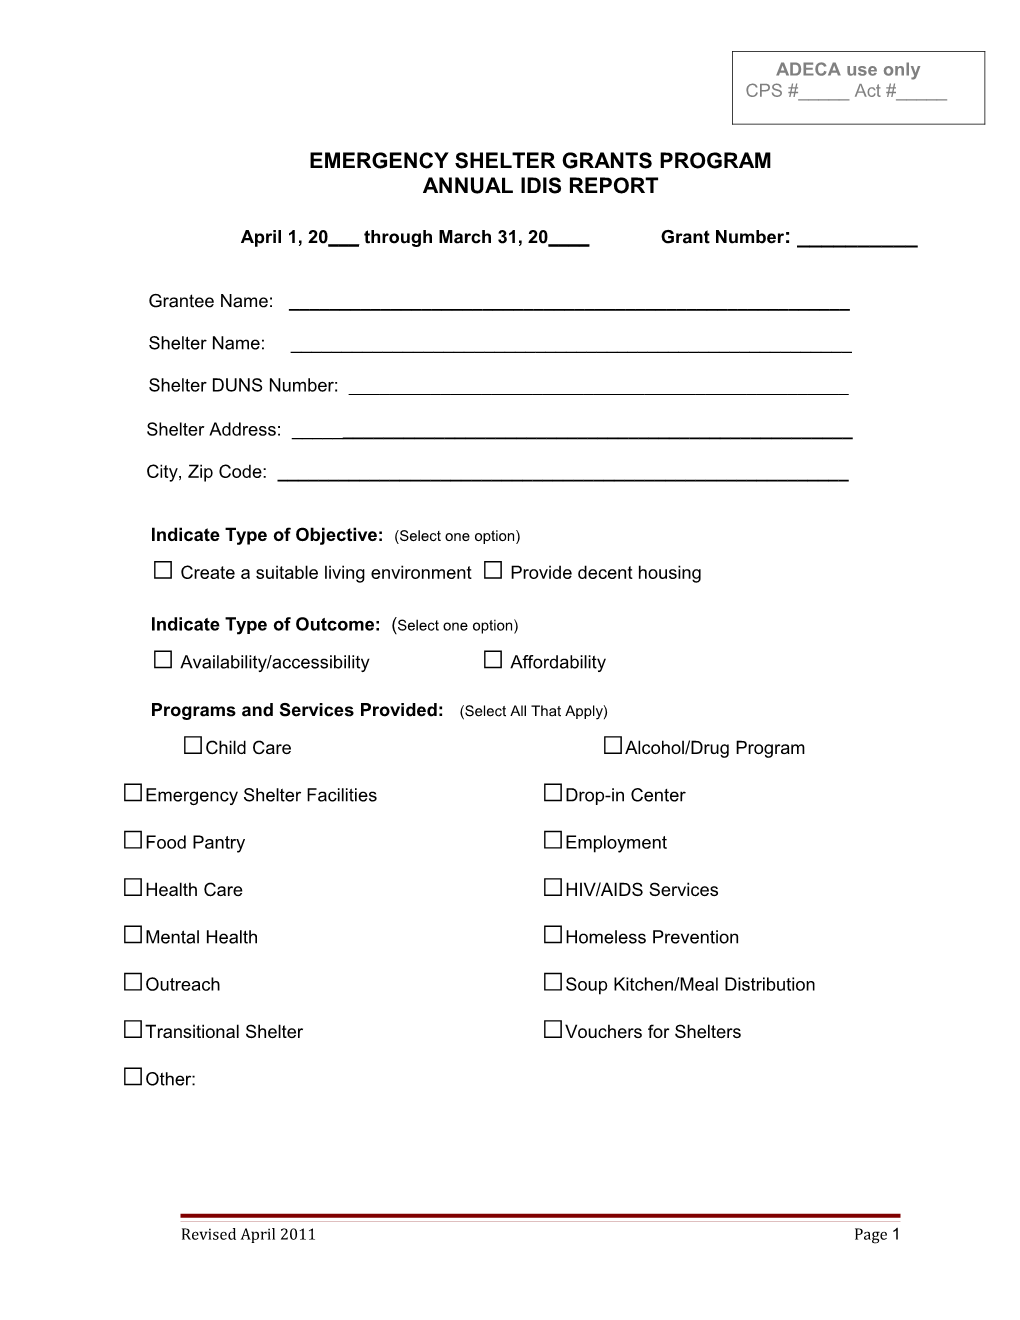 Annual IDIS Report Form Revised April 2011